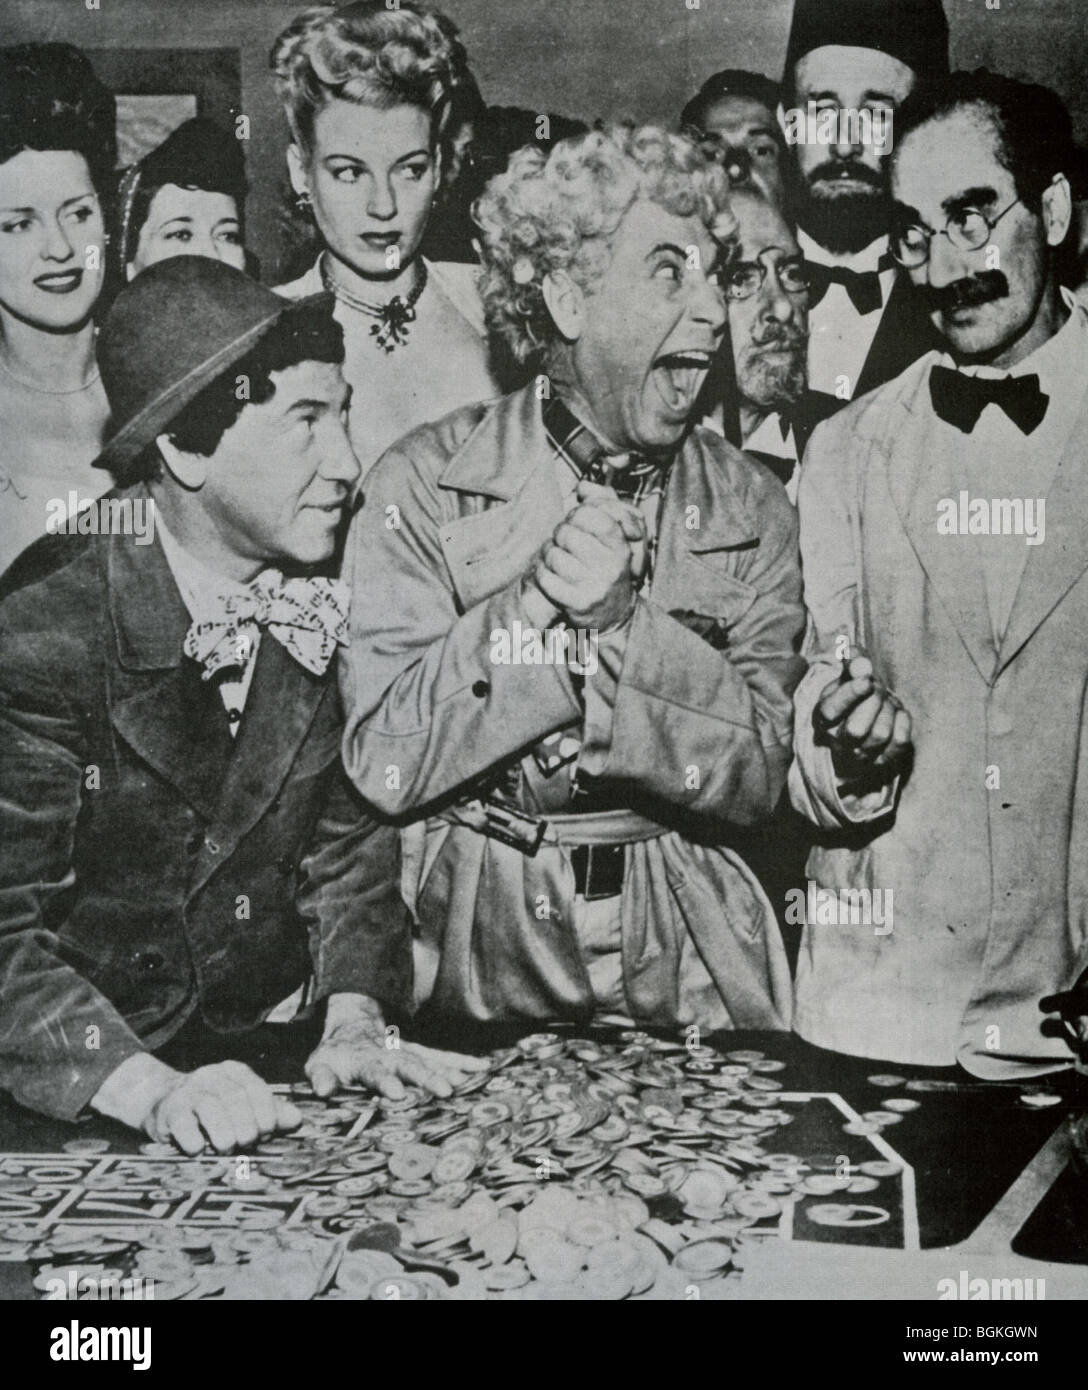 Una notte a Casablanca - 1946 David Loew film con i fratelli Marx Foto Stock